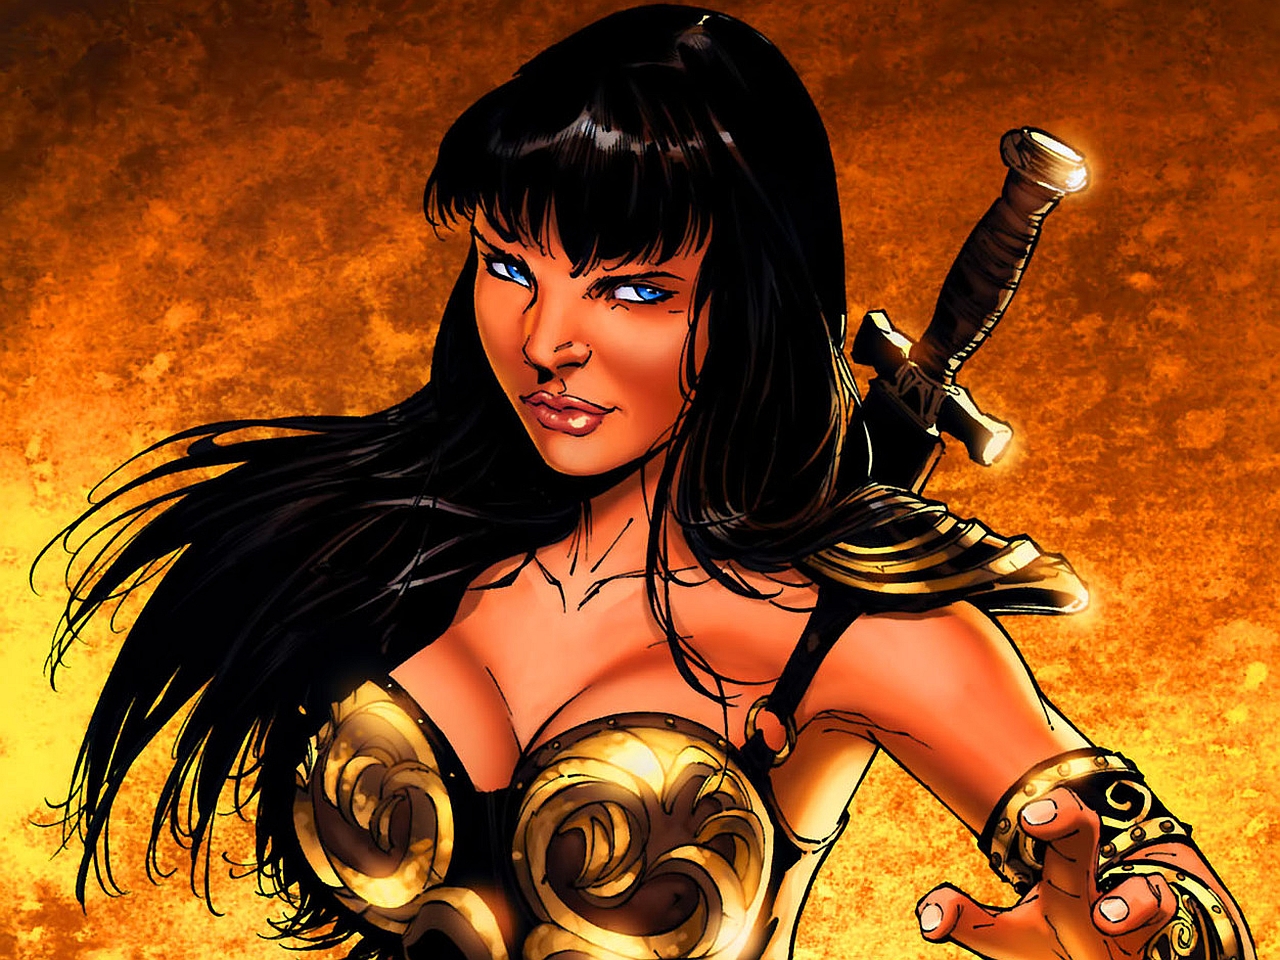 Xena: Warrior Princess Images. 